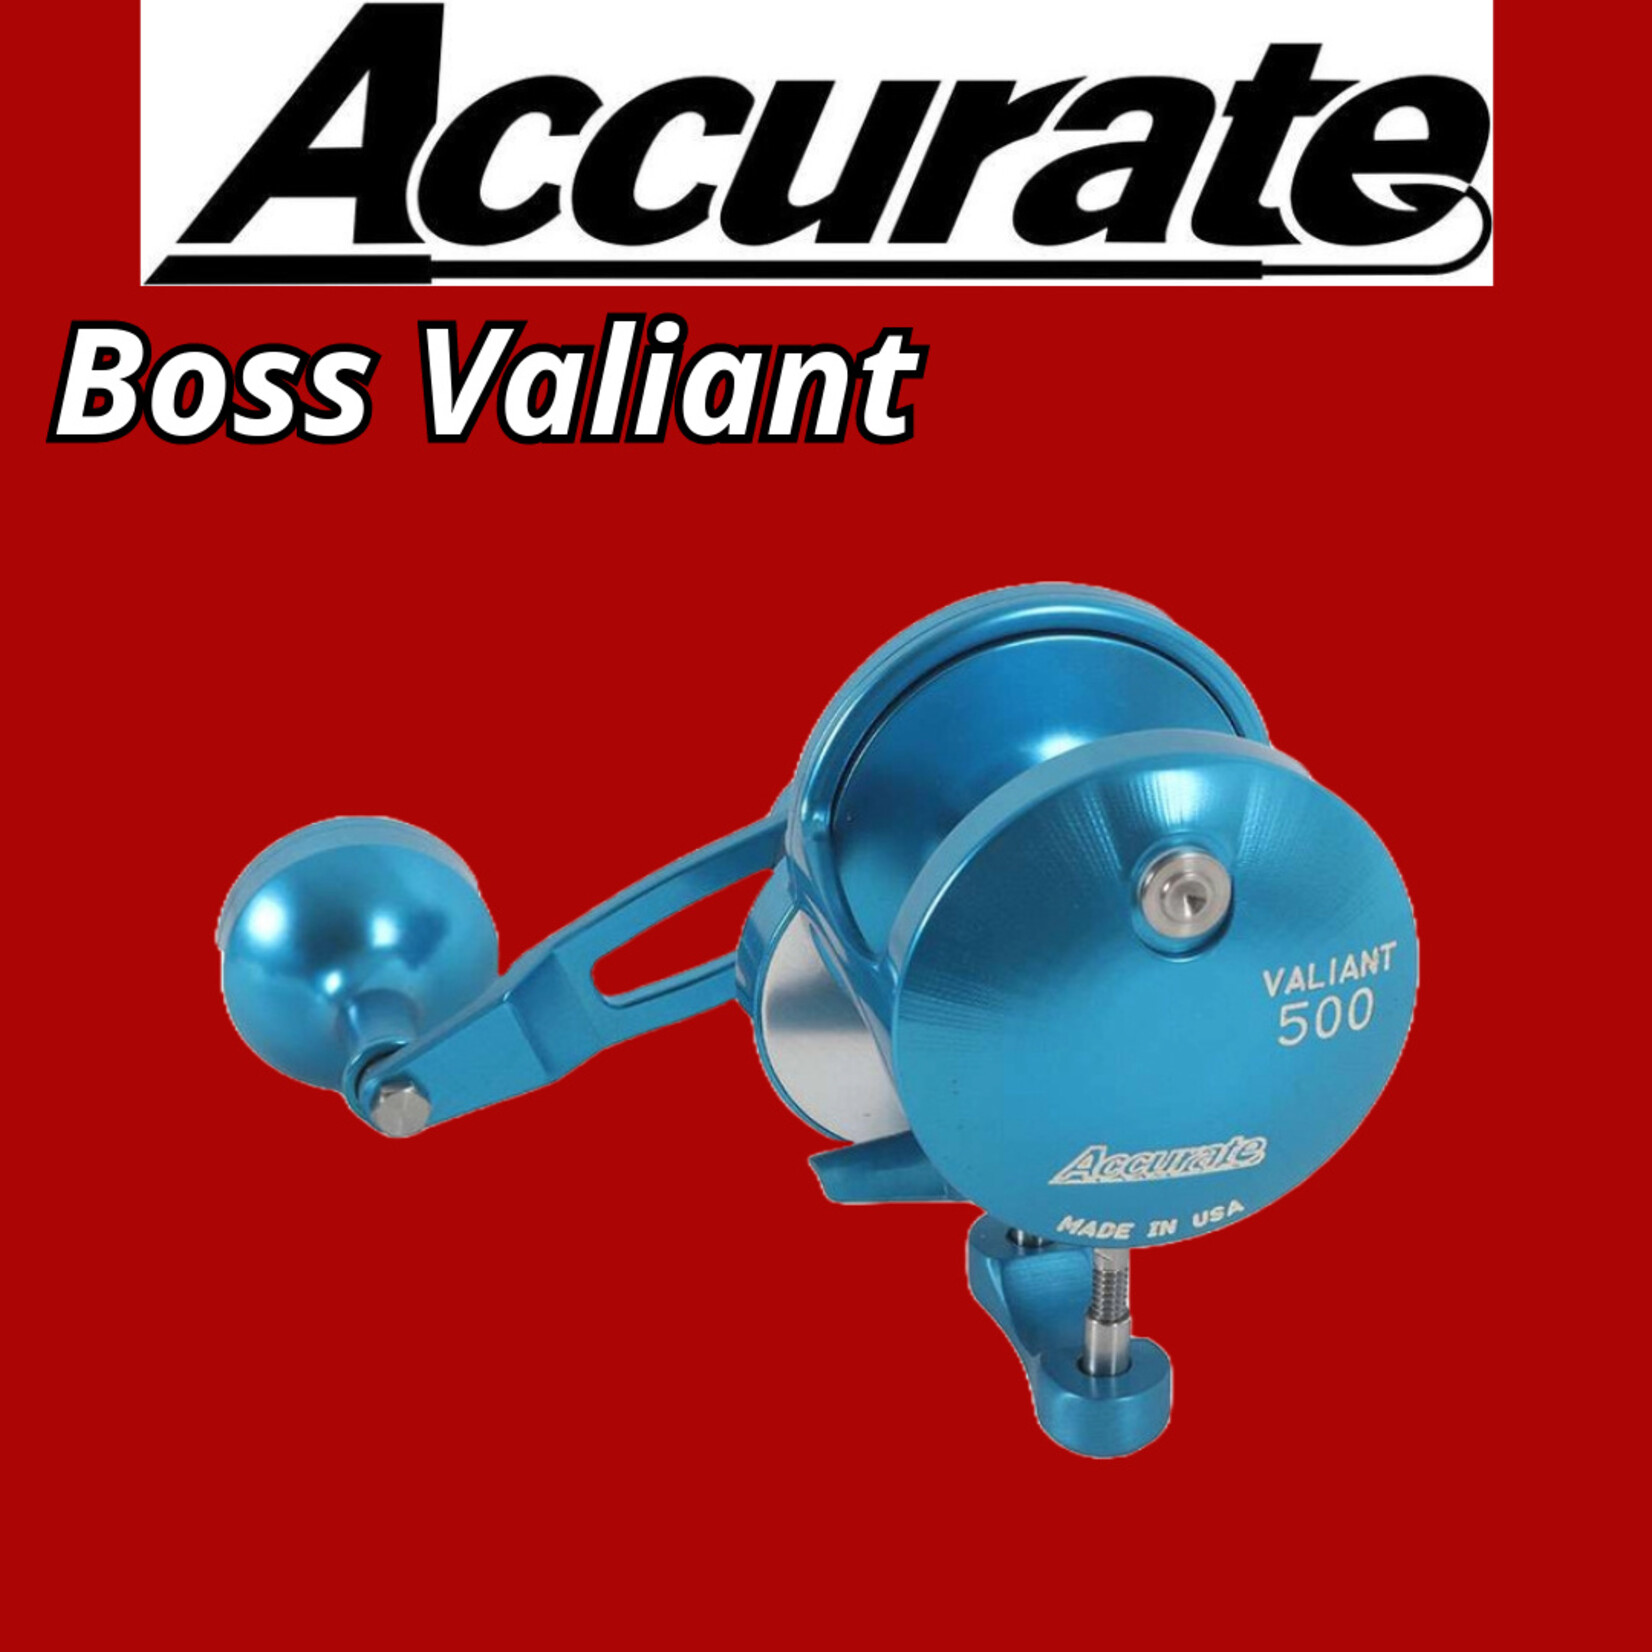 Accurate Boss Valiant